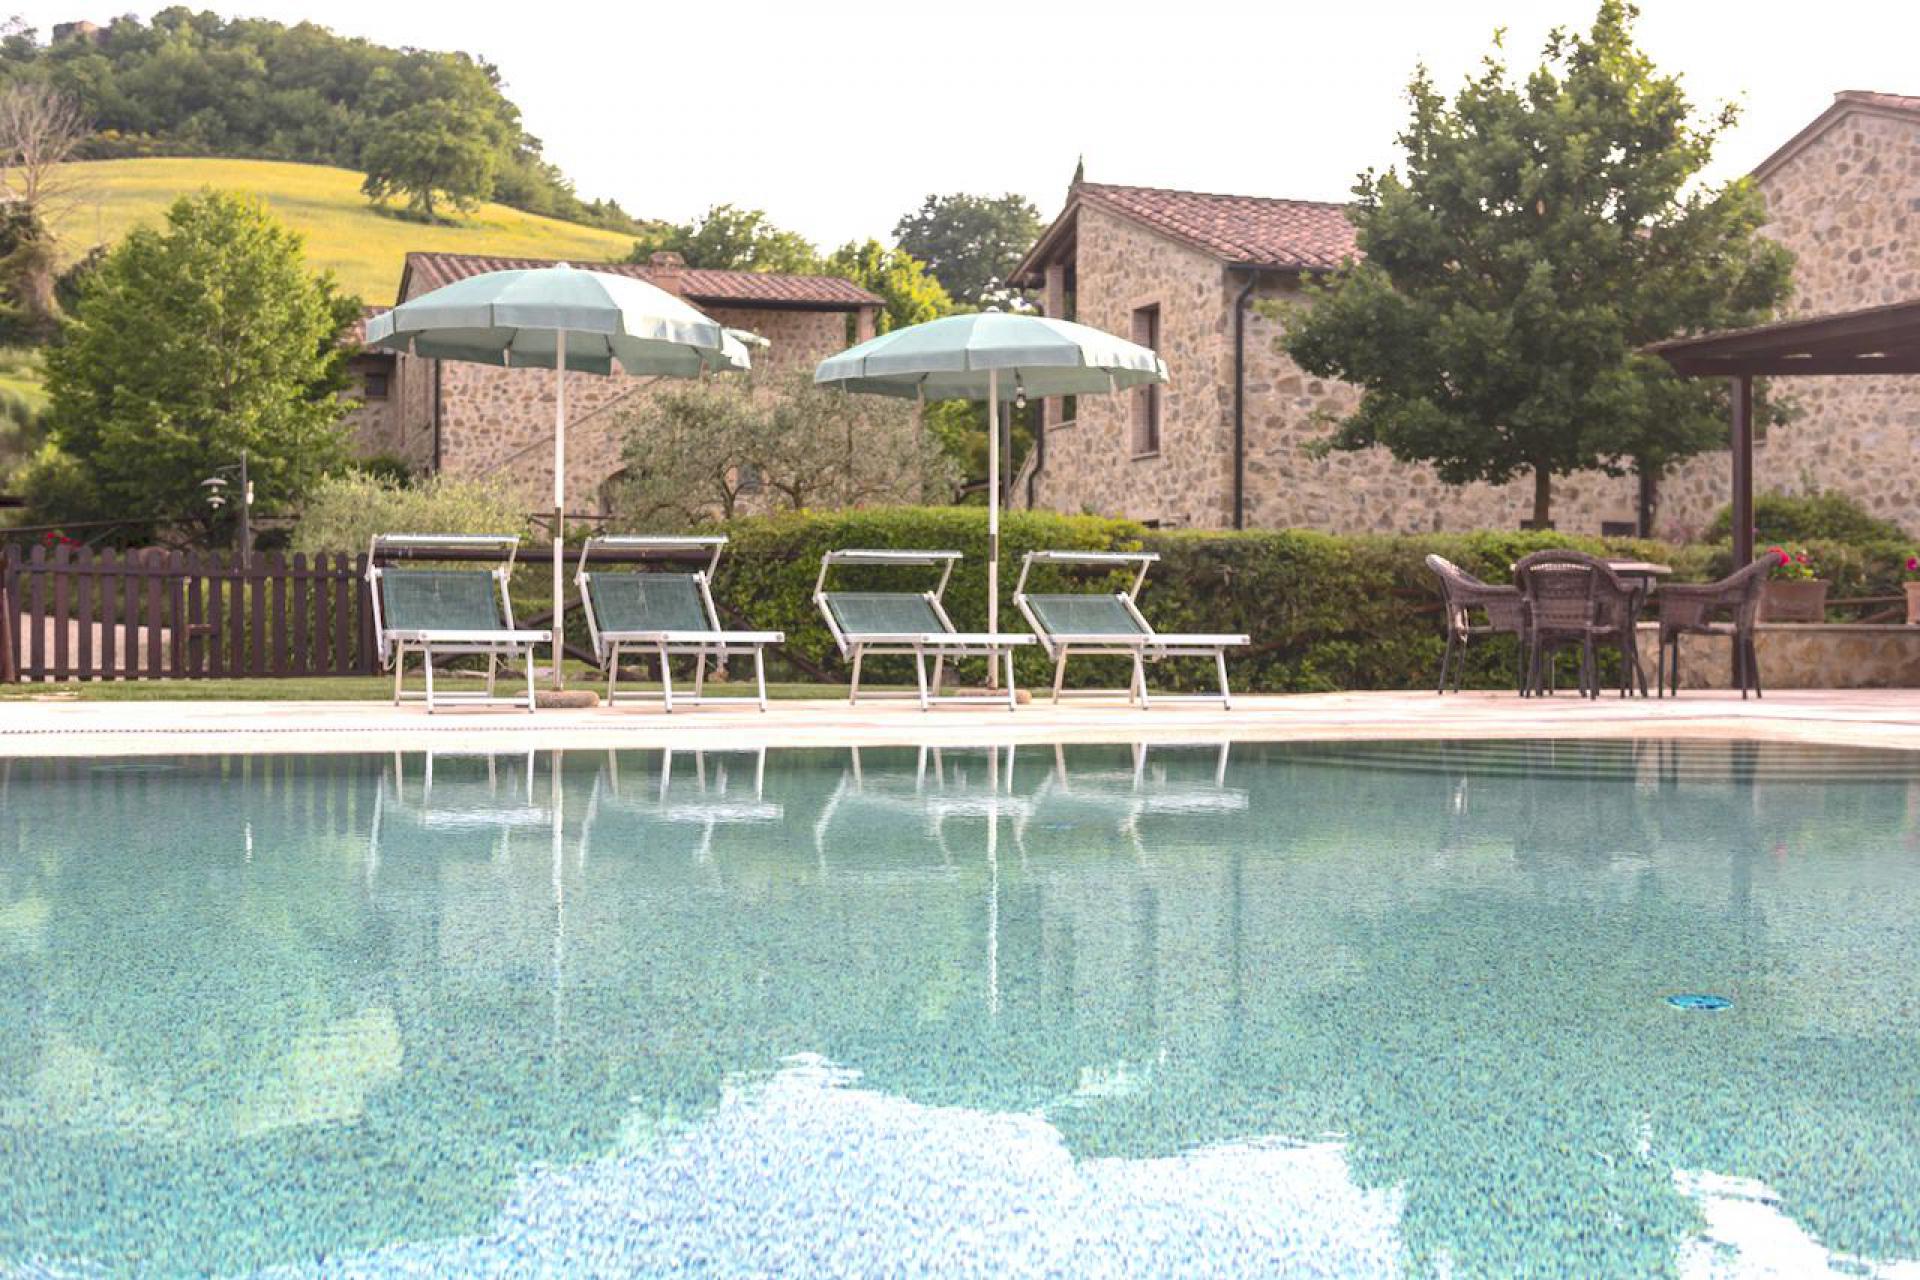 Agriturismo Toscane Agriturismo Country Resort Toscane met mooi zwembad en Restaurant